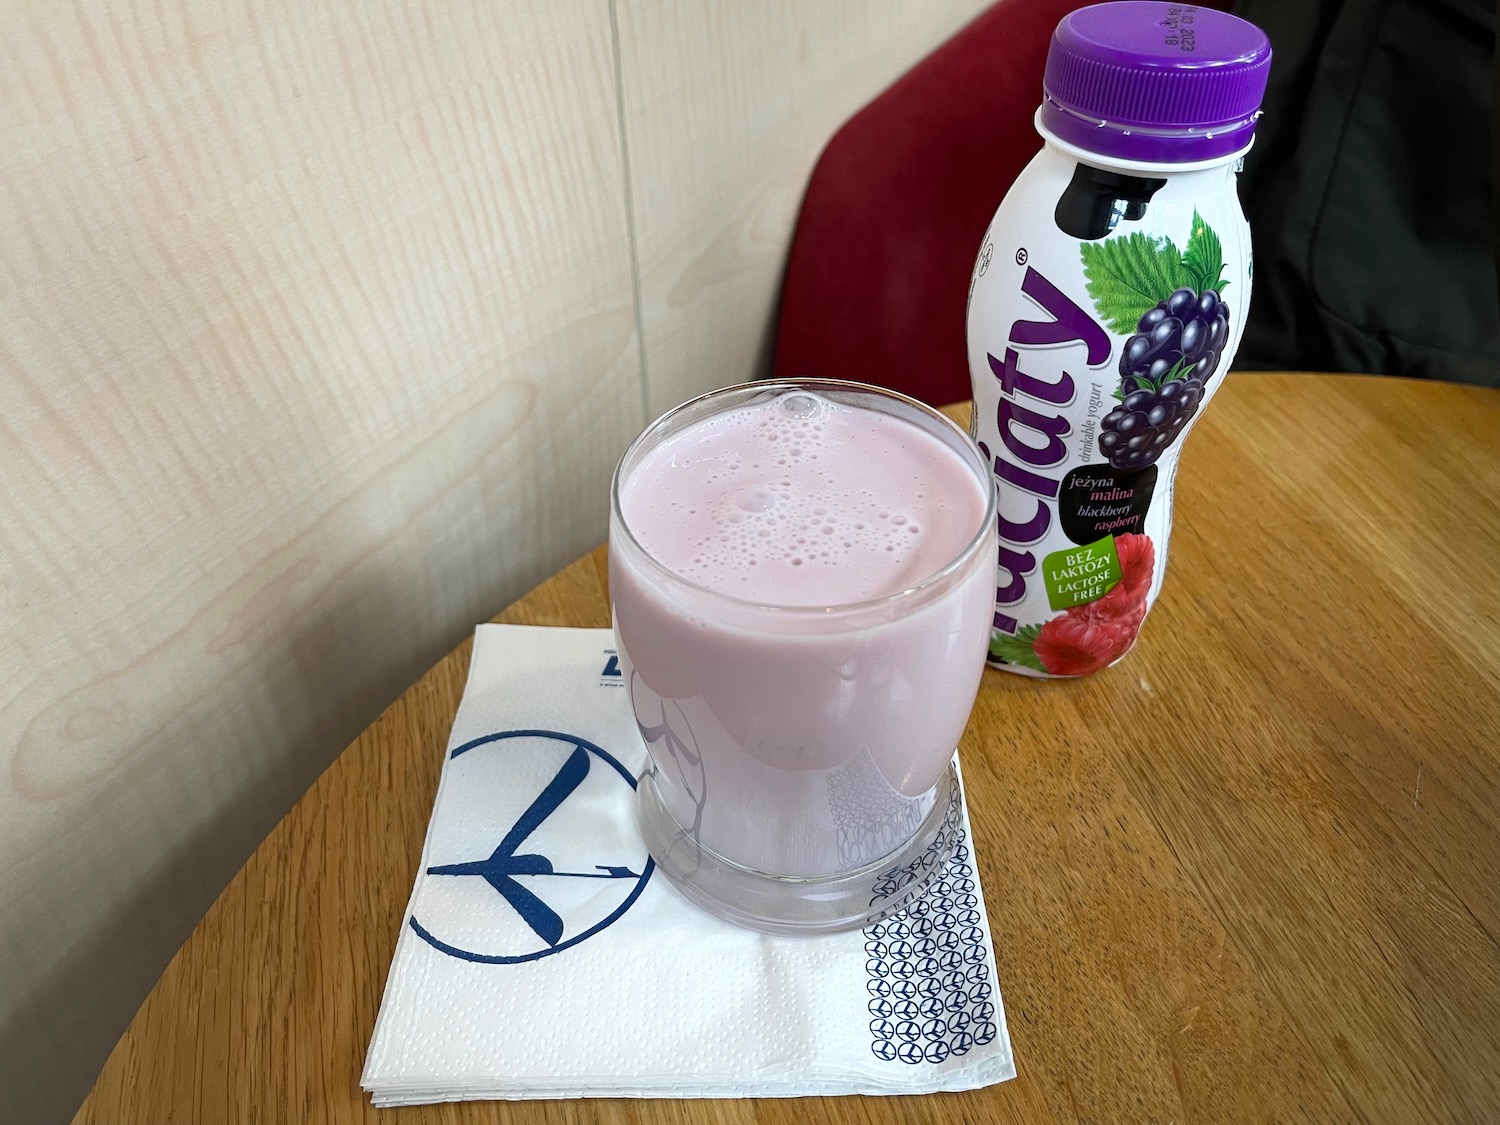 a glass of pink liquid next to a bottle of yogurt